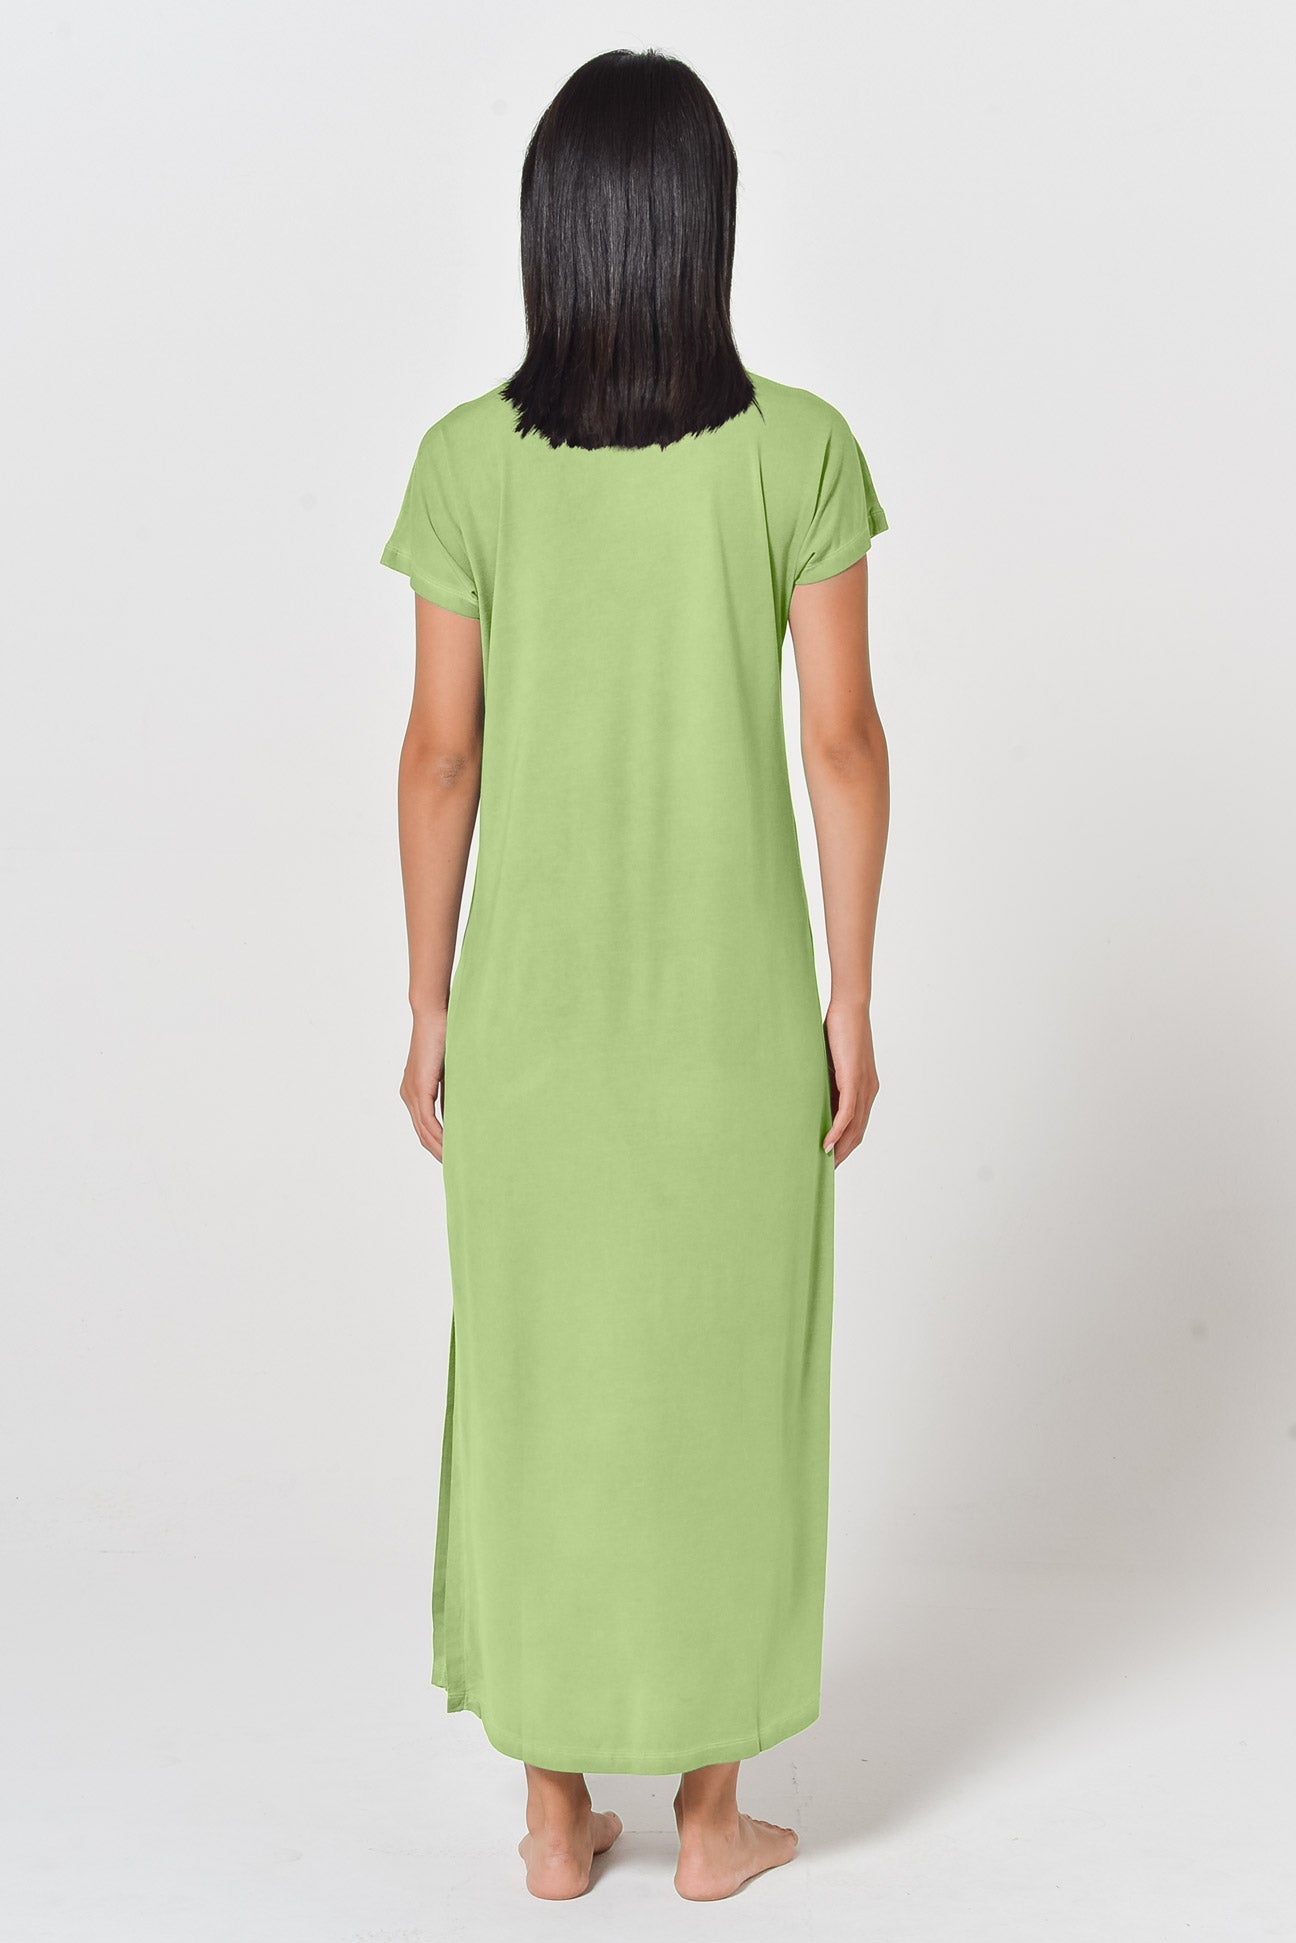 Tee Dress - Kiwi - Dresses